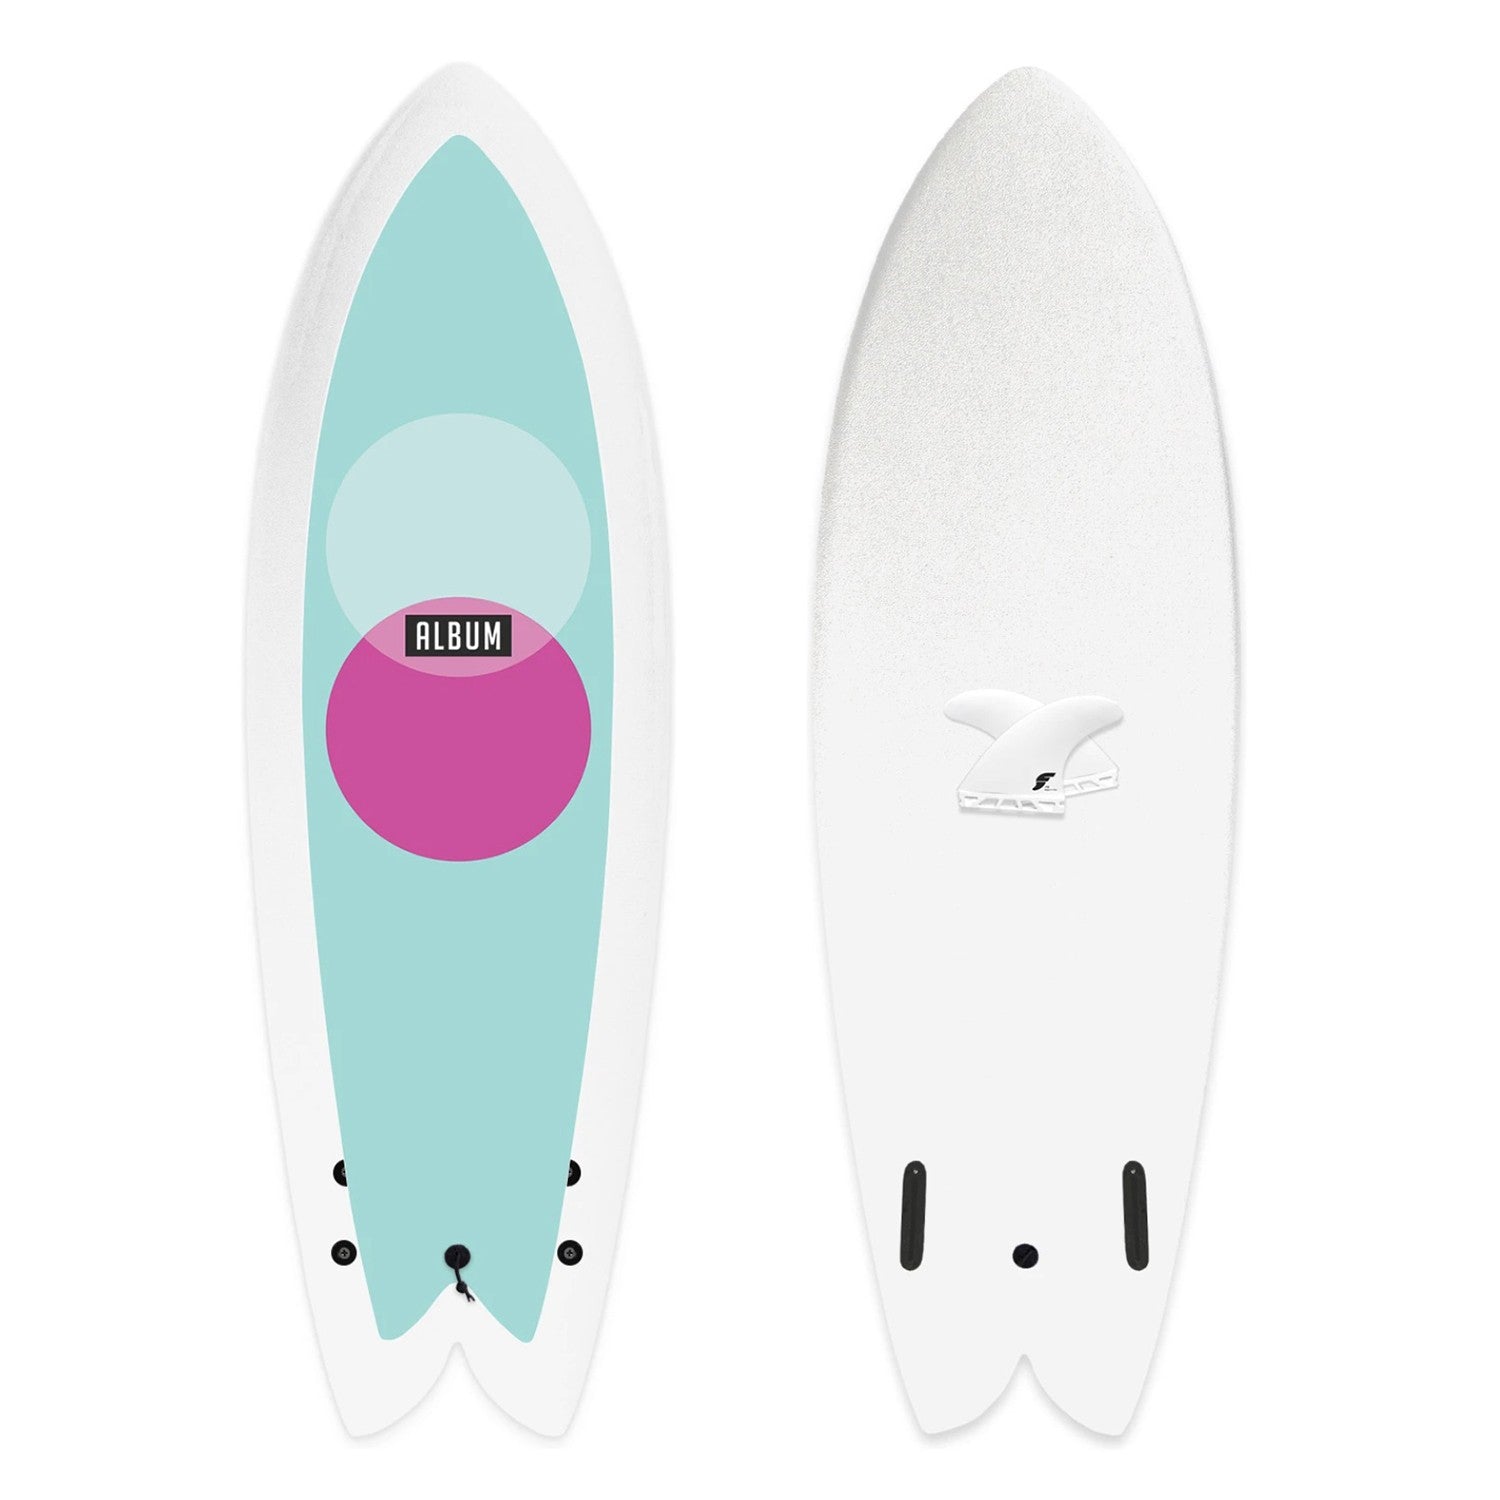 ALBUM Surfboards - Presto Fish 5'7 Soft Top - Seafoam